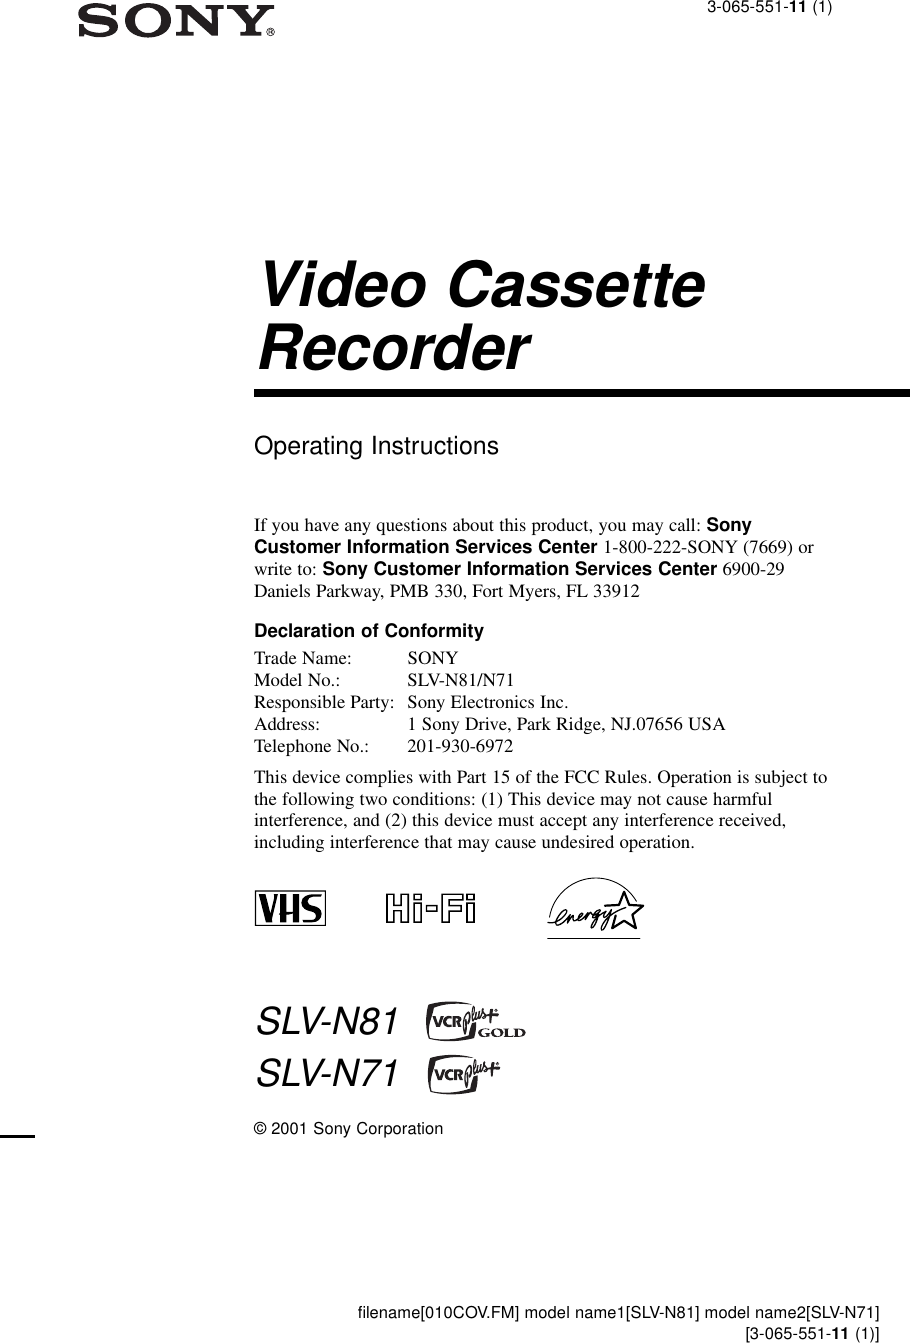 Sony SLV-N71 & SLV-N81 VHS VCR Service Manual on CD in PDF Format 